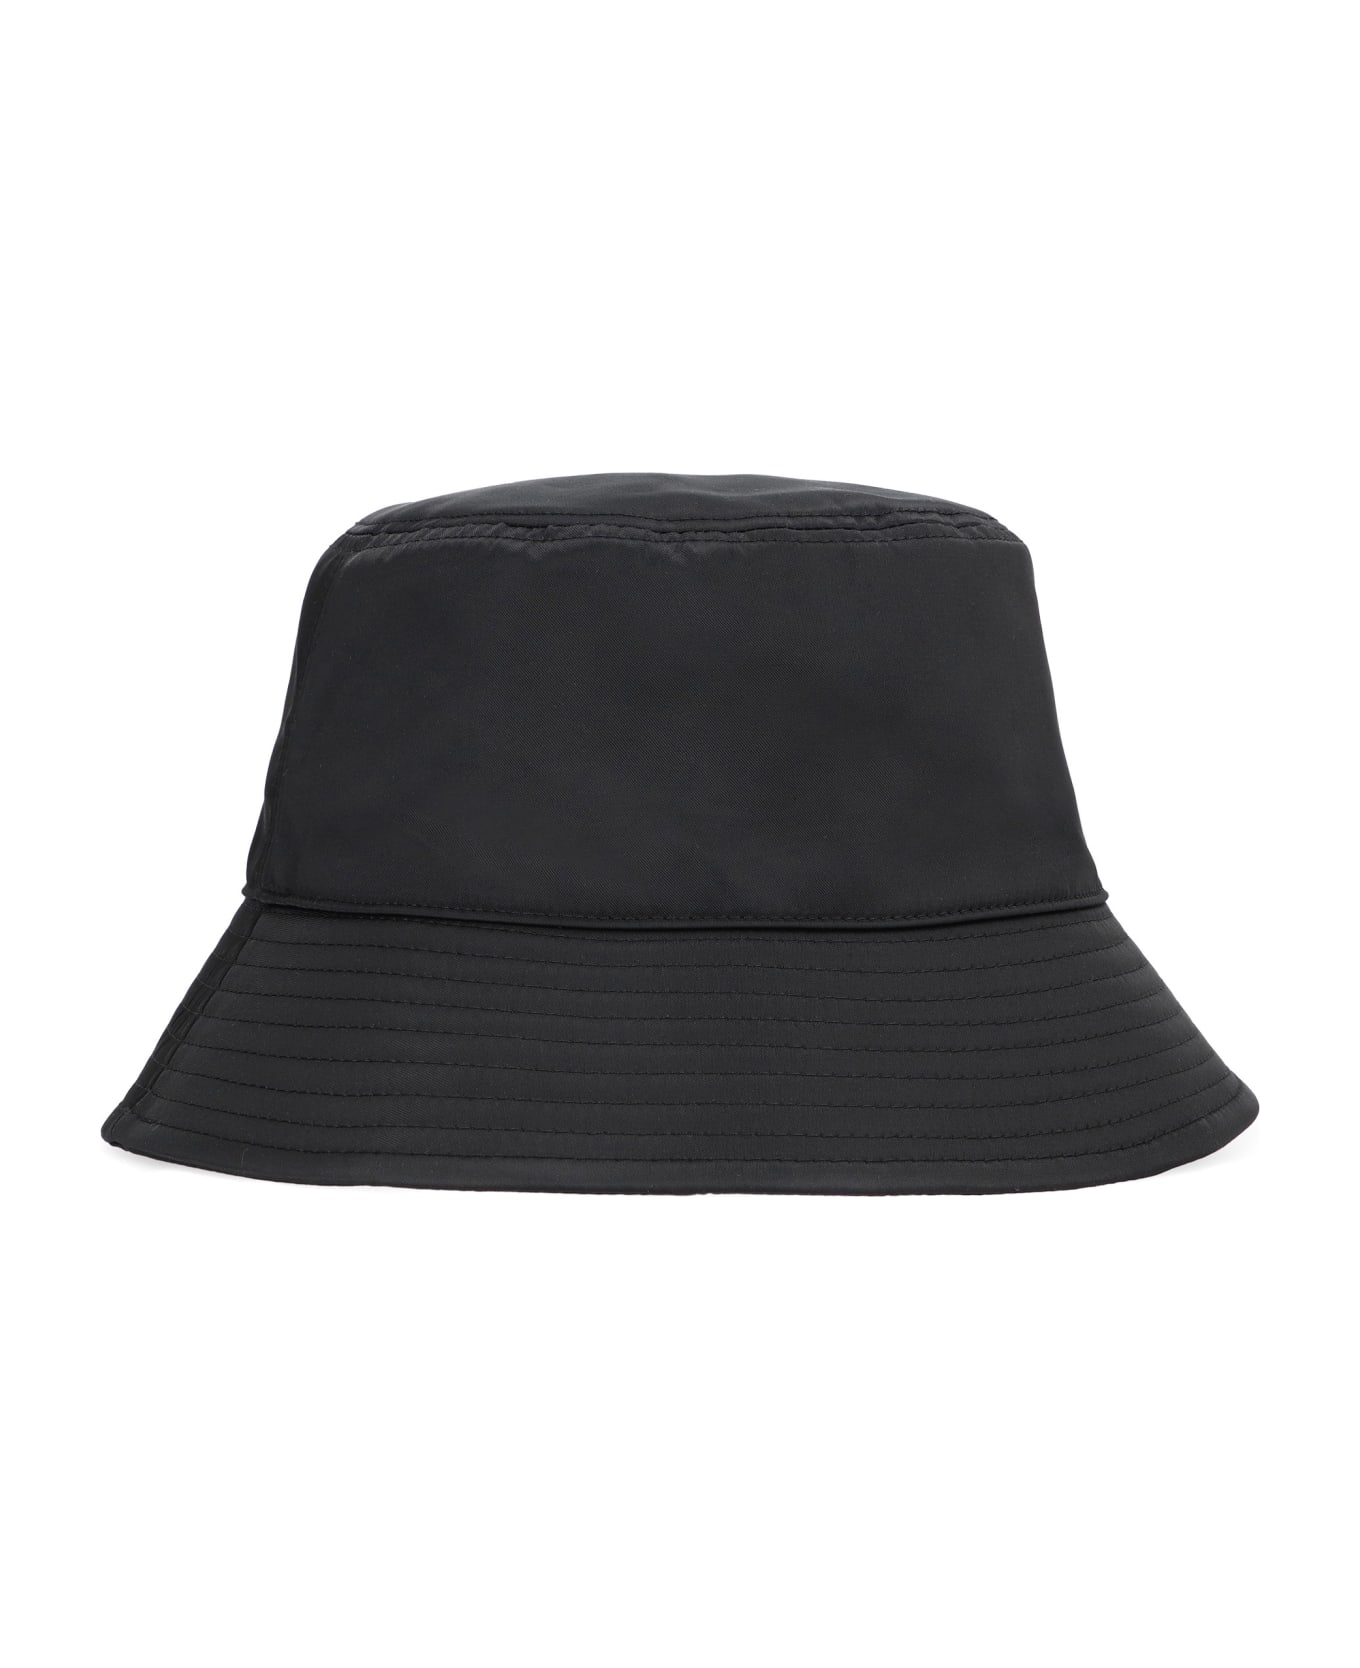 MCM Bucket Hat - black 帽子